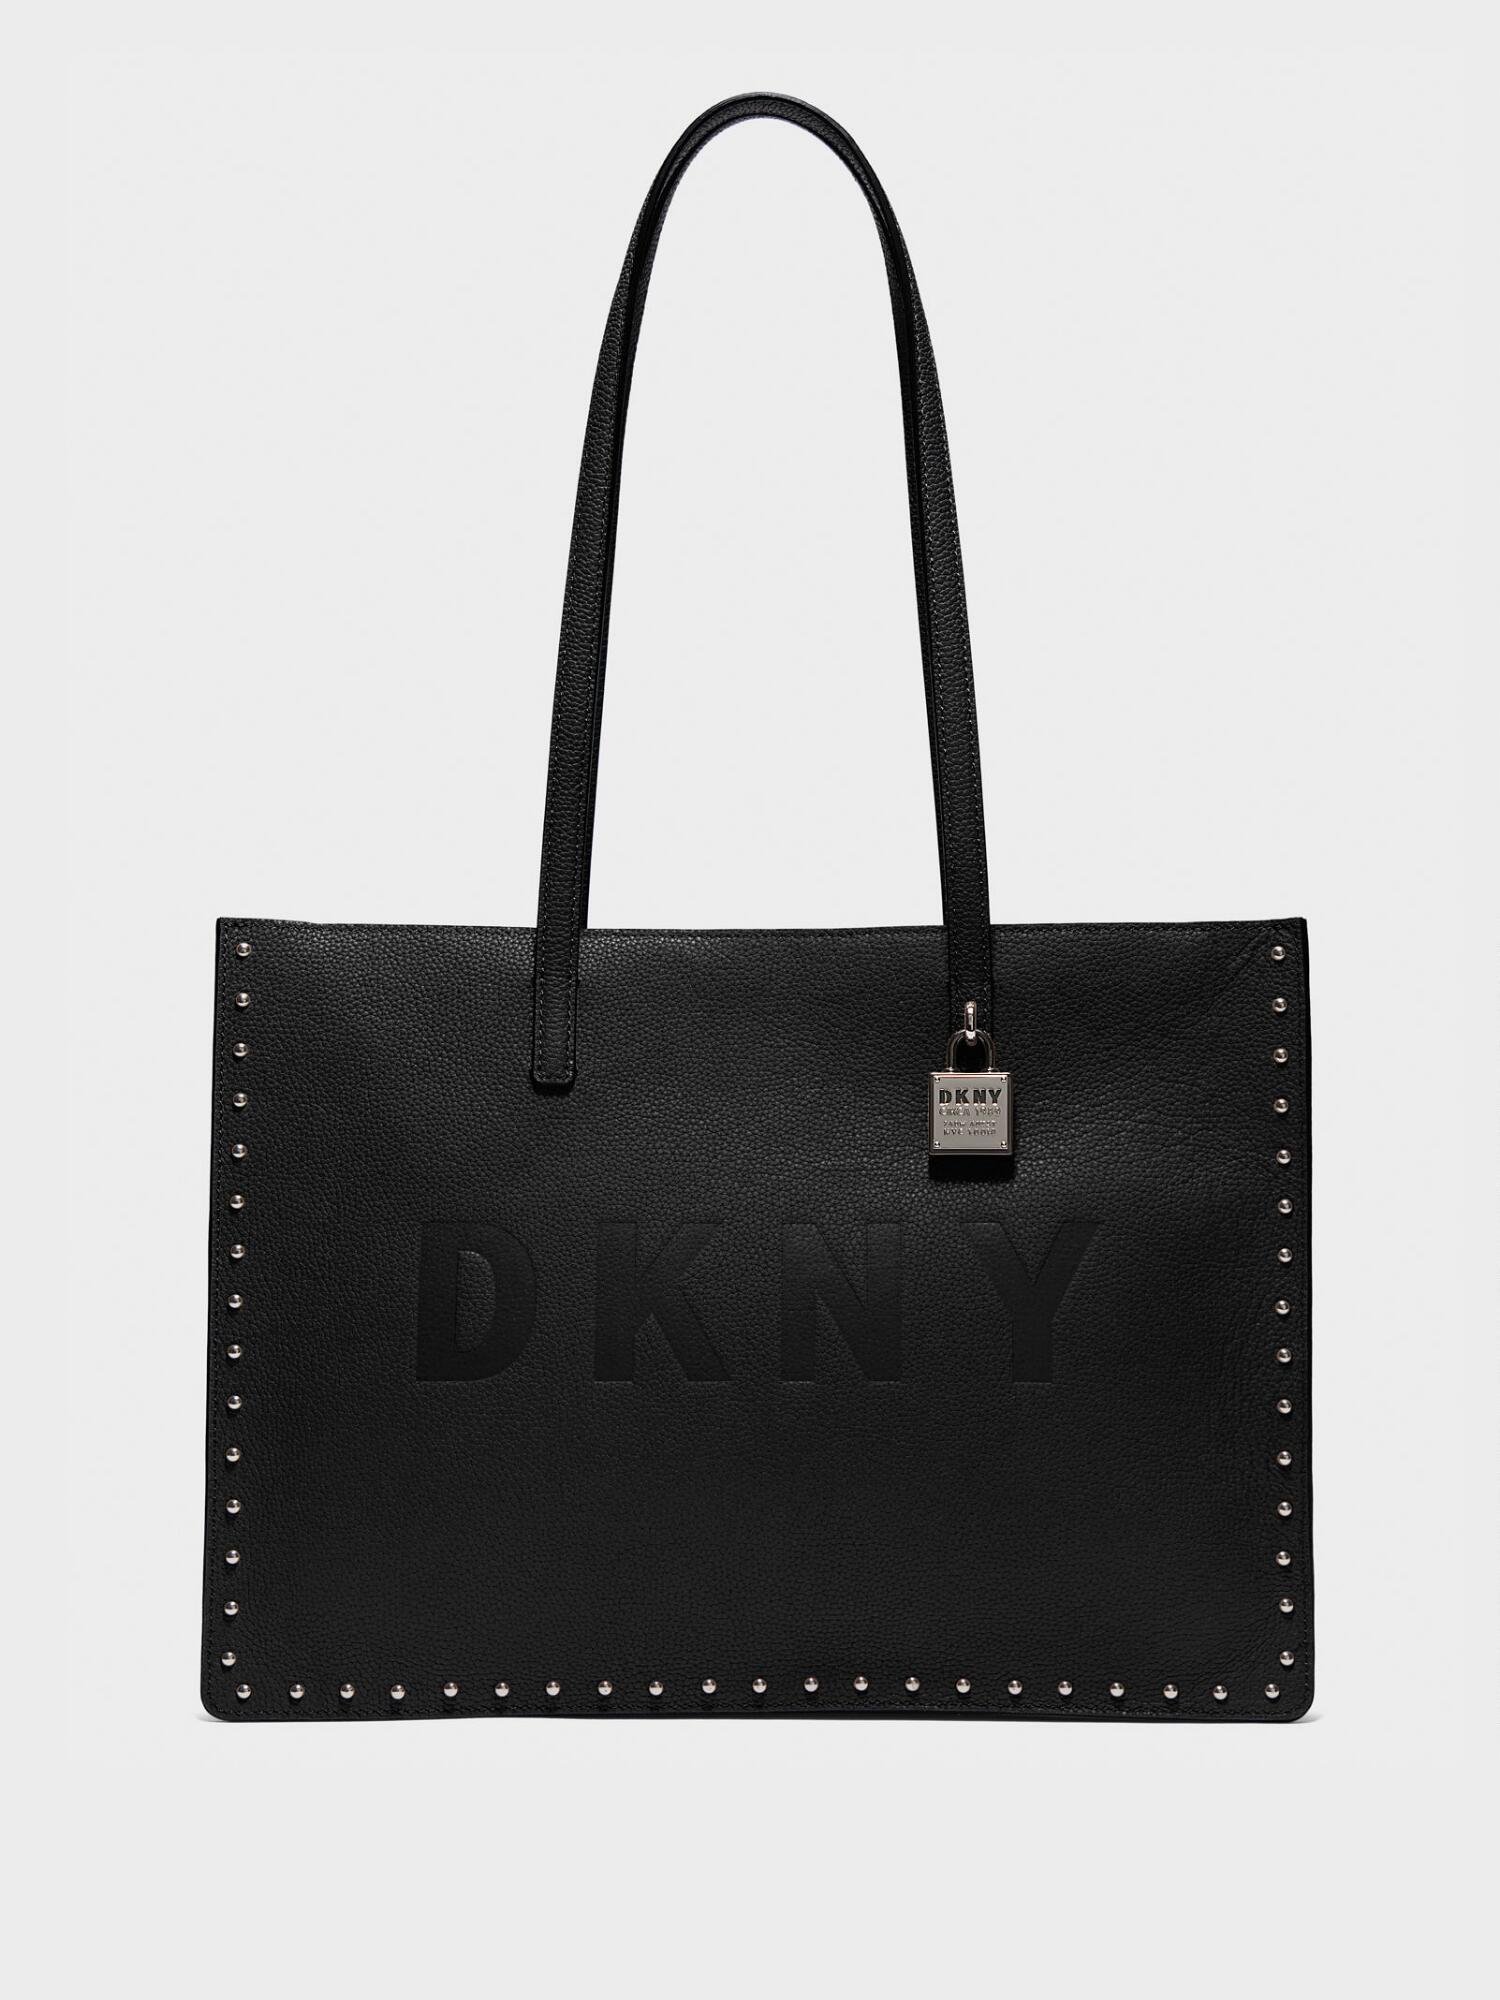 Donna Karan Handbags Australia | The Art of Mike Mignola